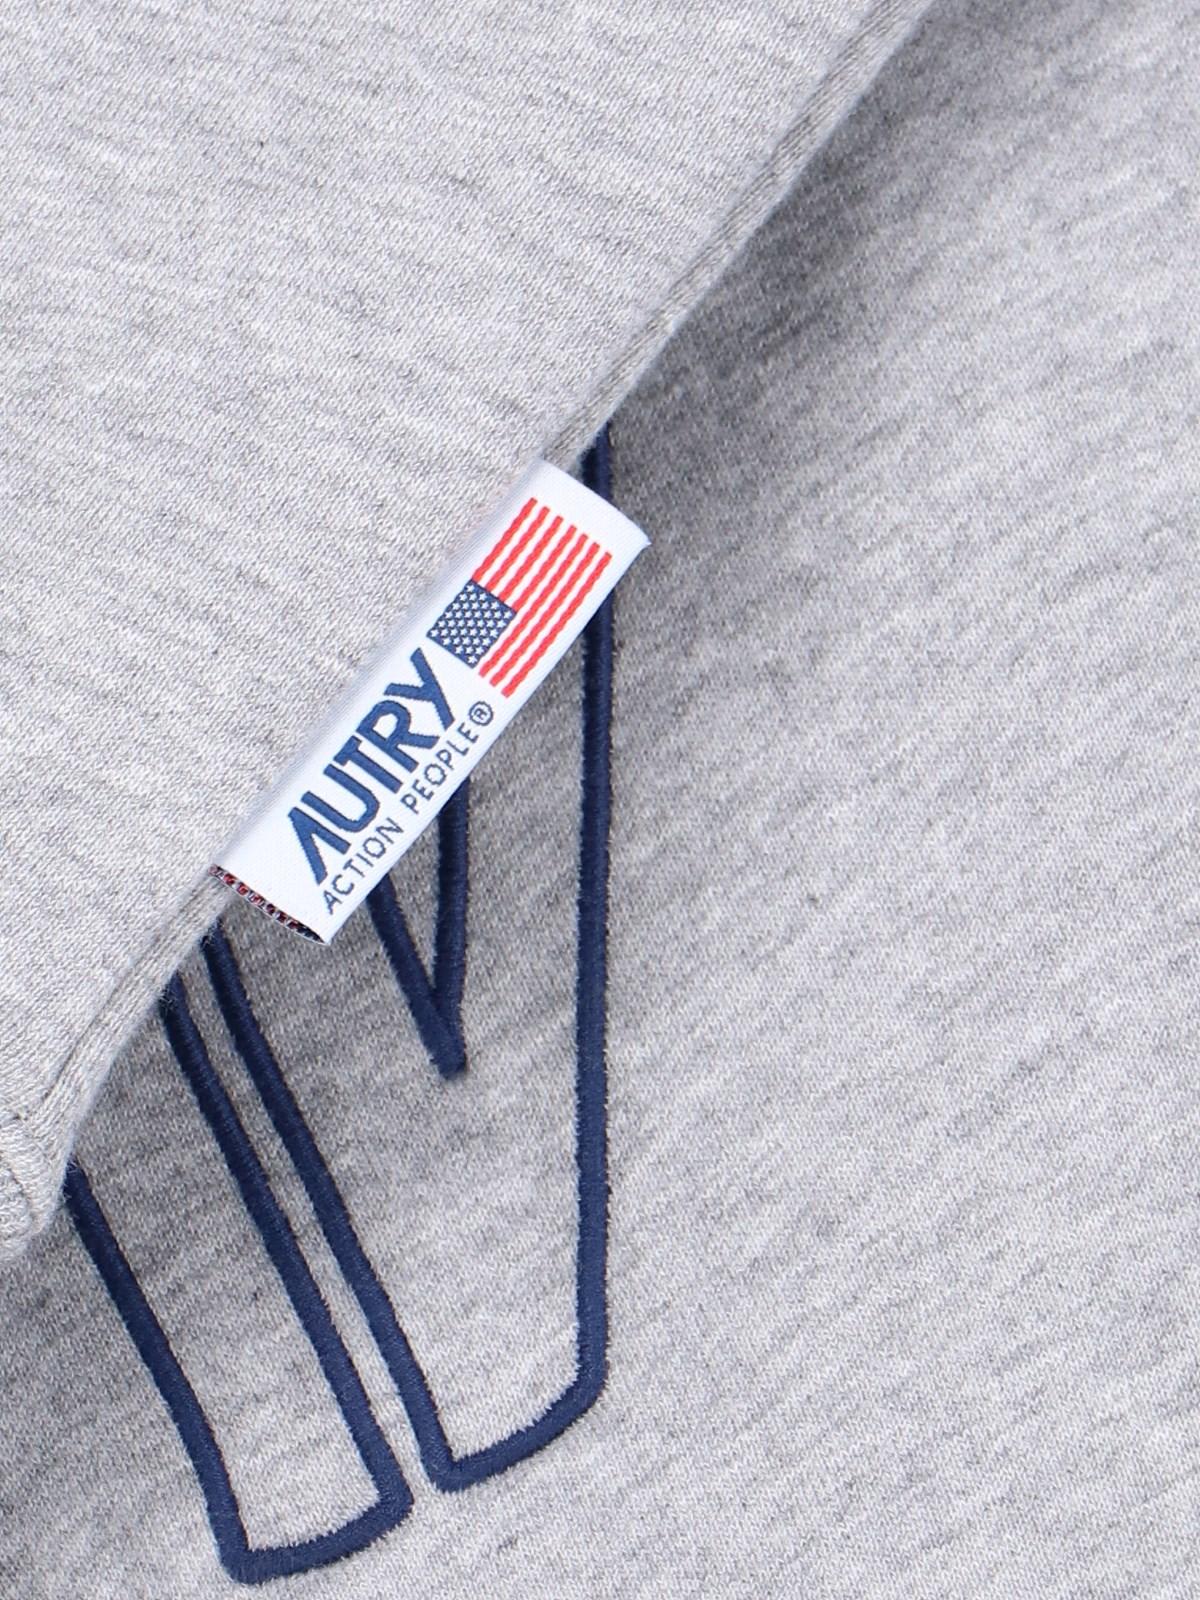 Shop Autry Logo Embroidery Sweatshirt In Grey